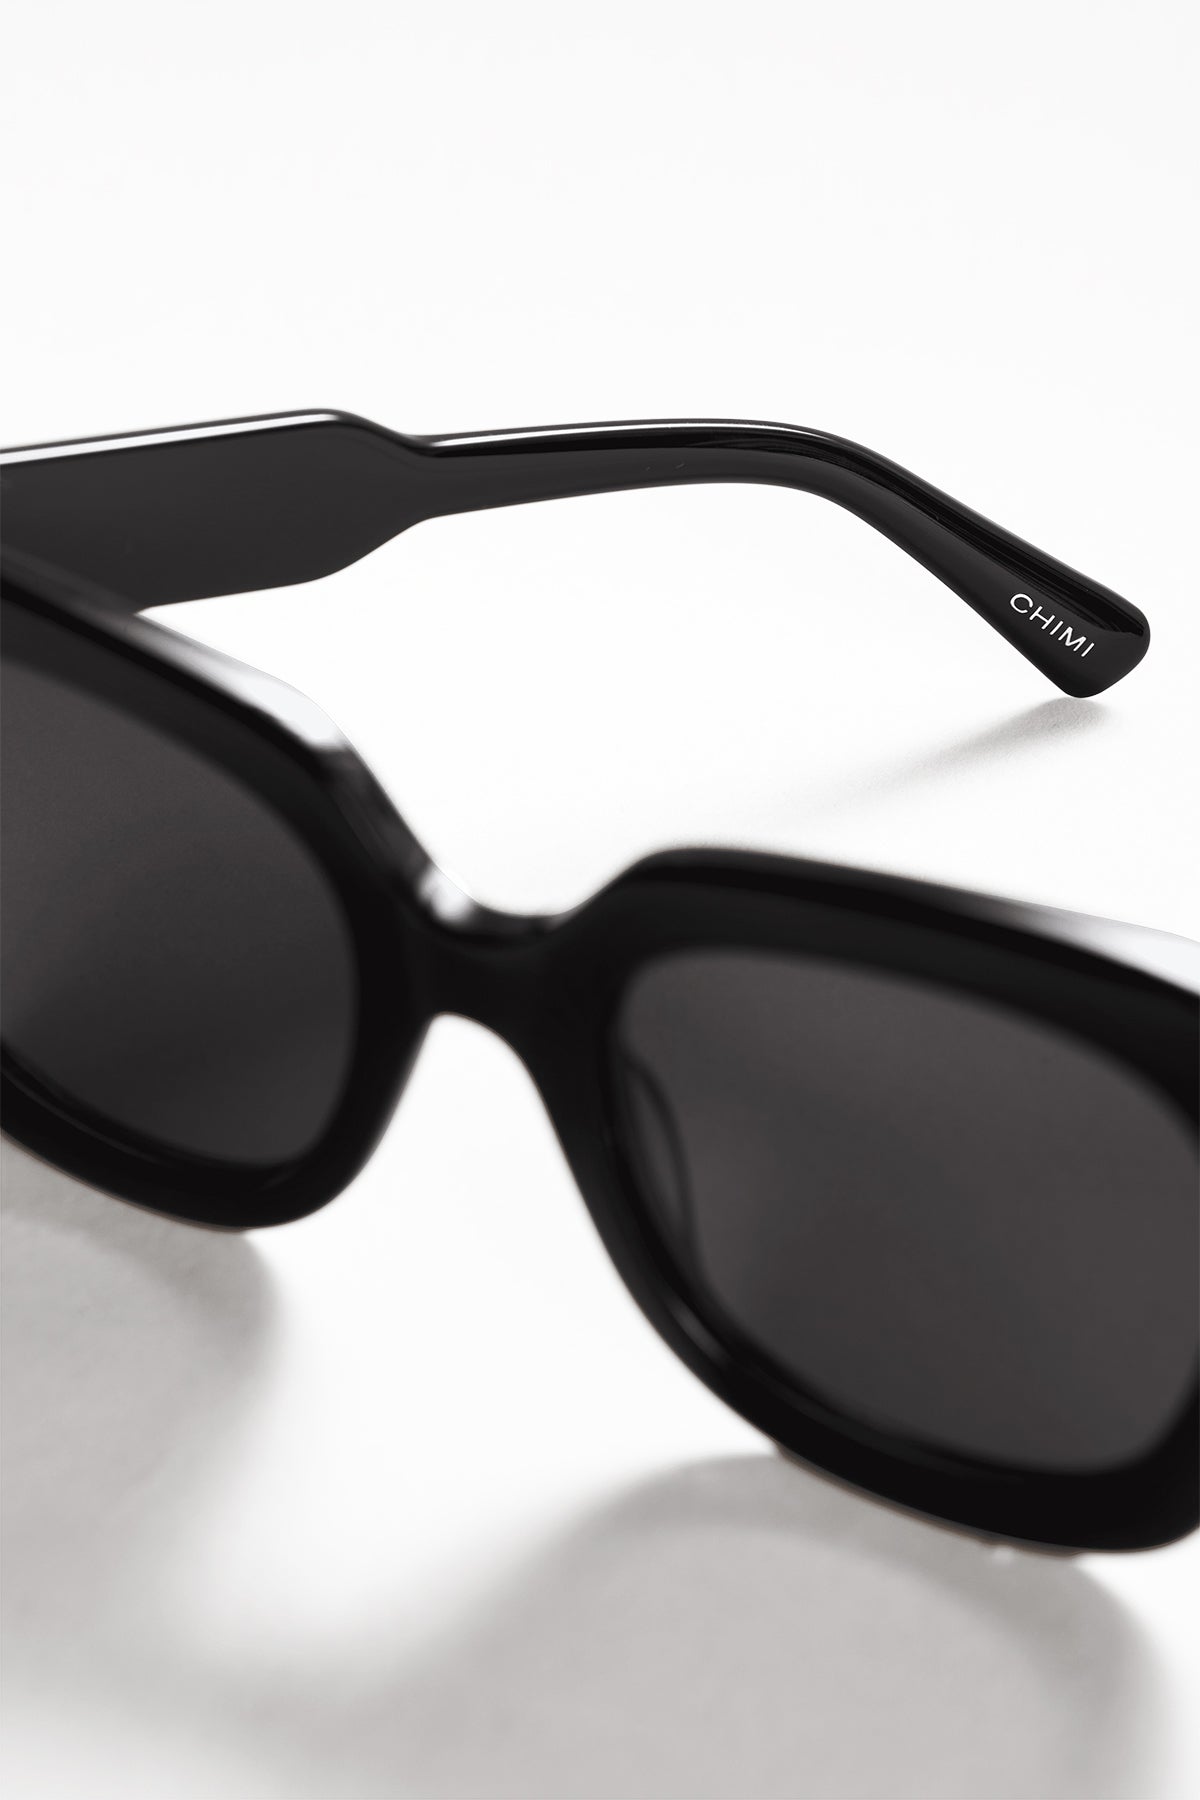 Chimi 08 Sunglasses Black Detail-22132856586433